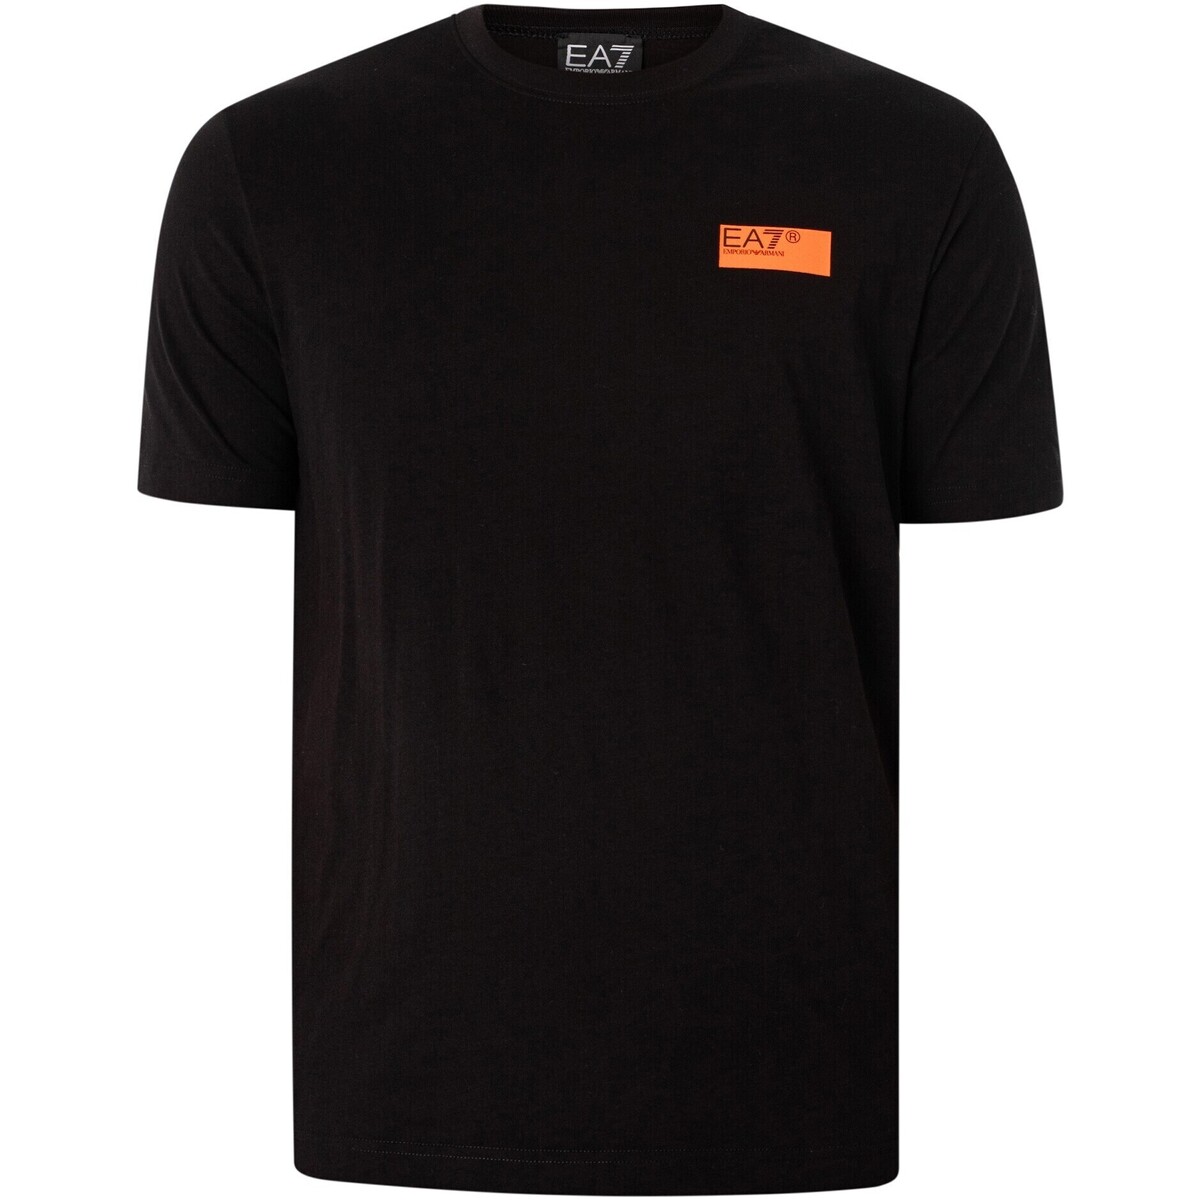 Textiel Heren T-shirts korte mouwen Emporio Armani EA7 Grafisch jersey T-shirt op de rug Zwart